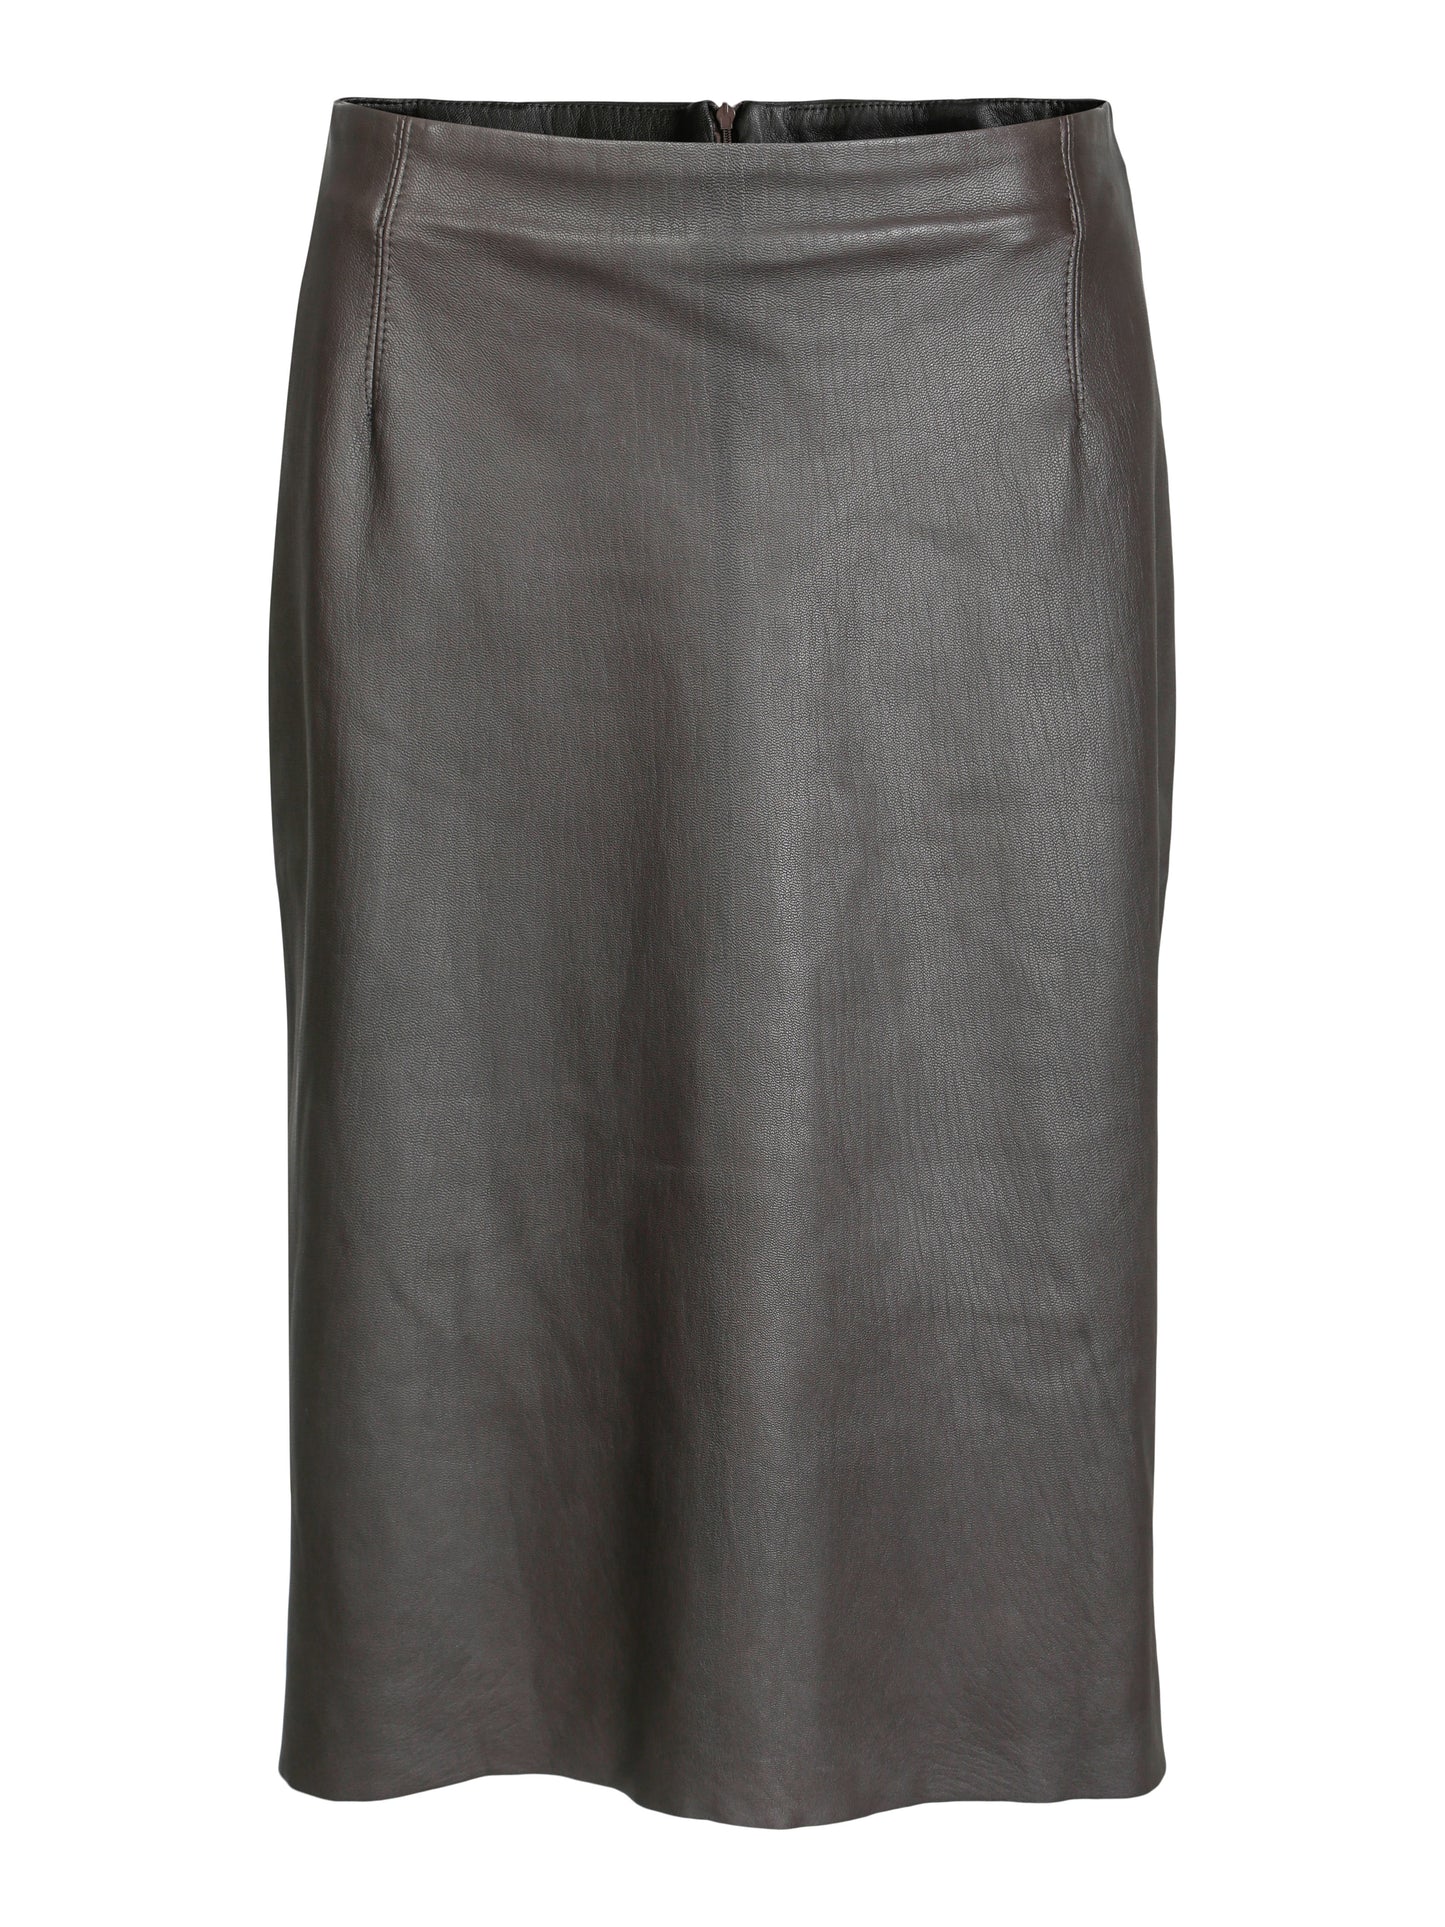 Knee -long leather nappa skirt